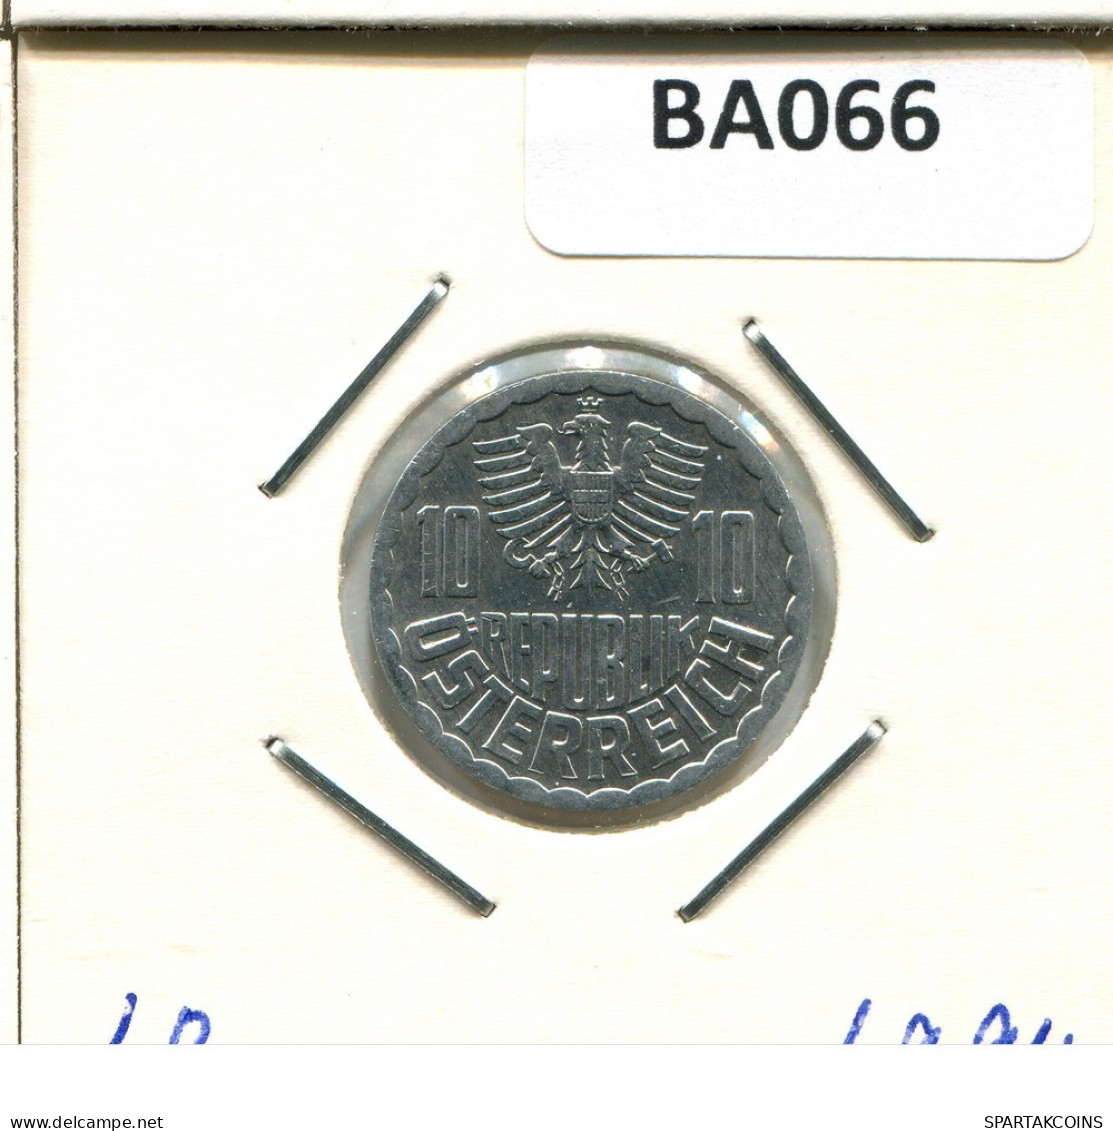 10 GROSCHEN 1994 AUSTRIA Coin #BA066.U.A